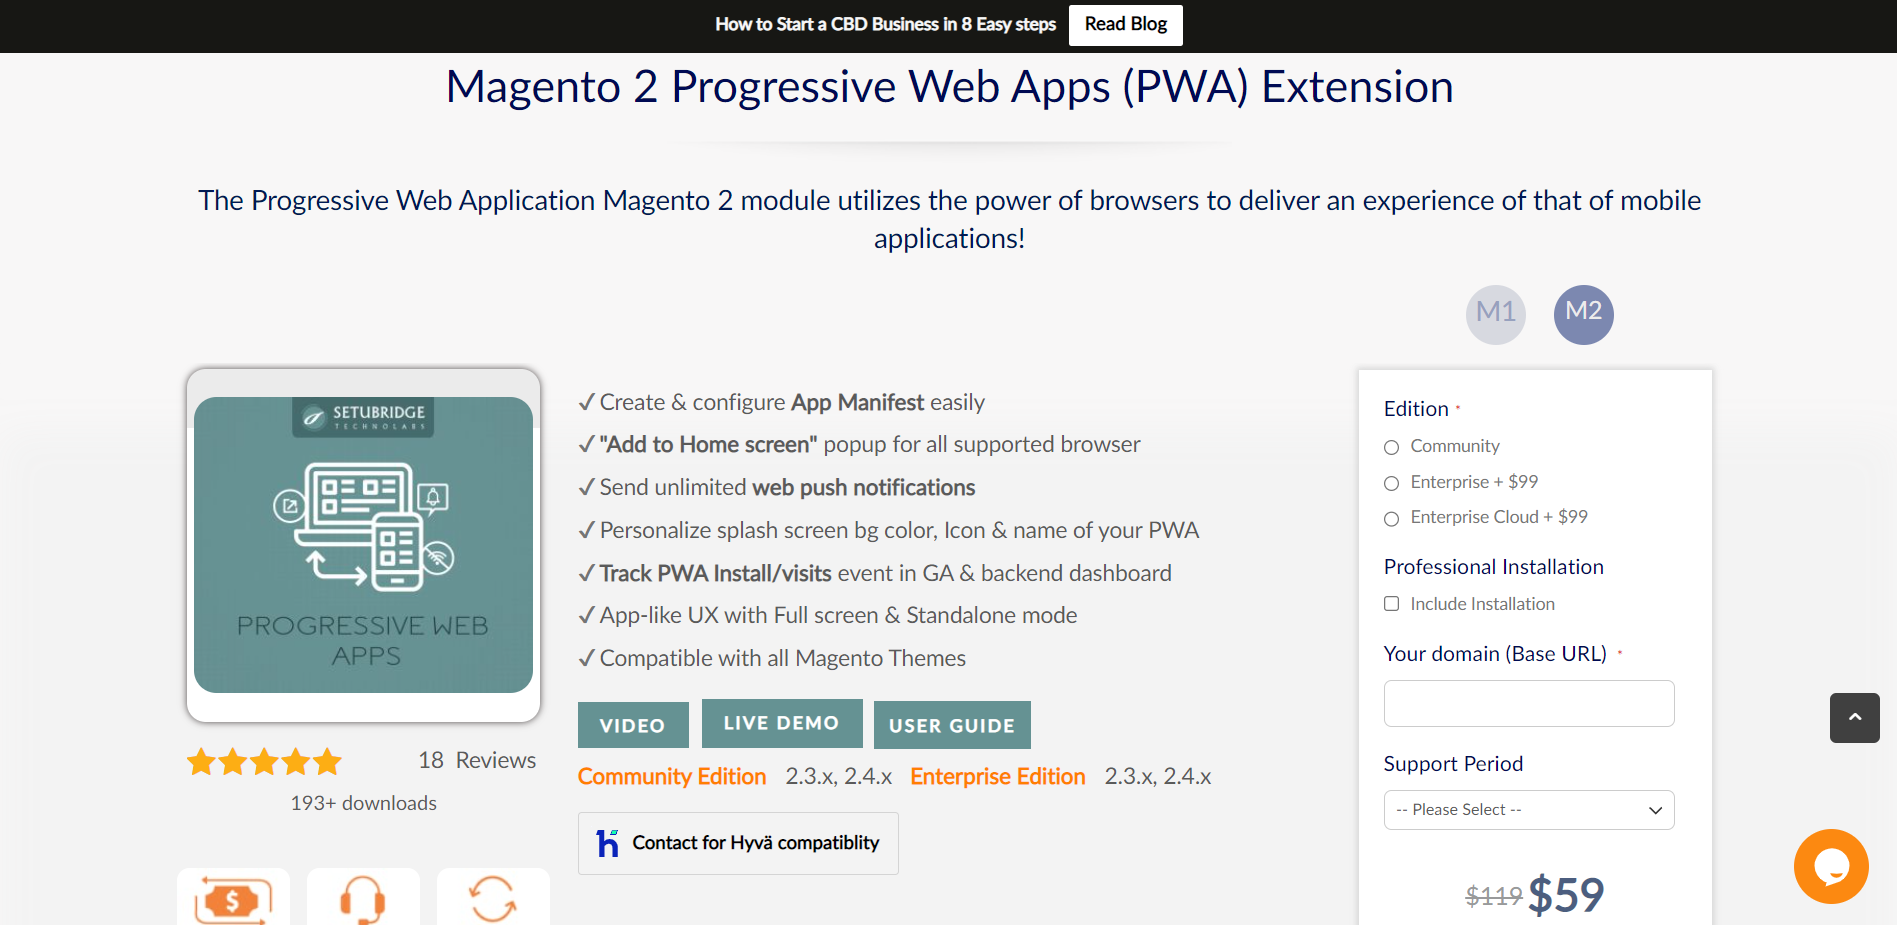 Magento 2 PWA extension by SetuBridge